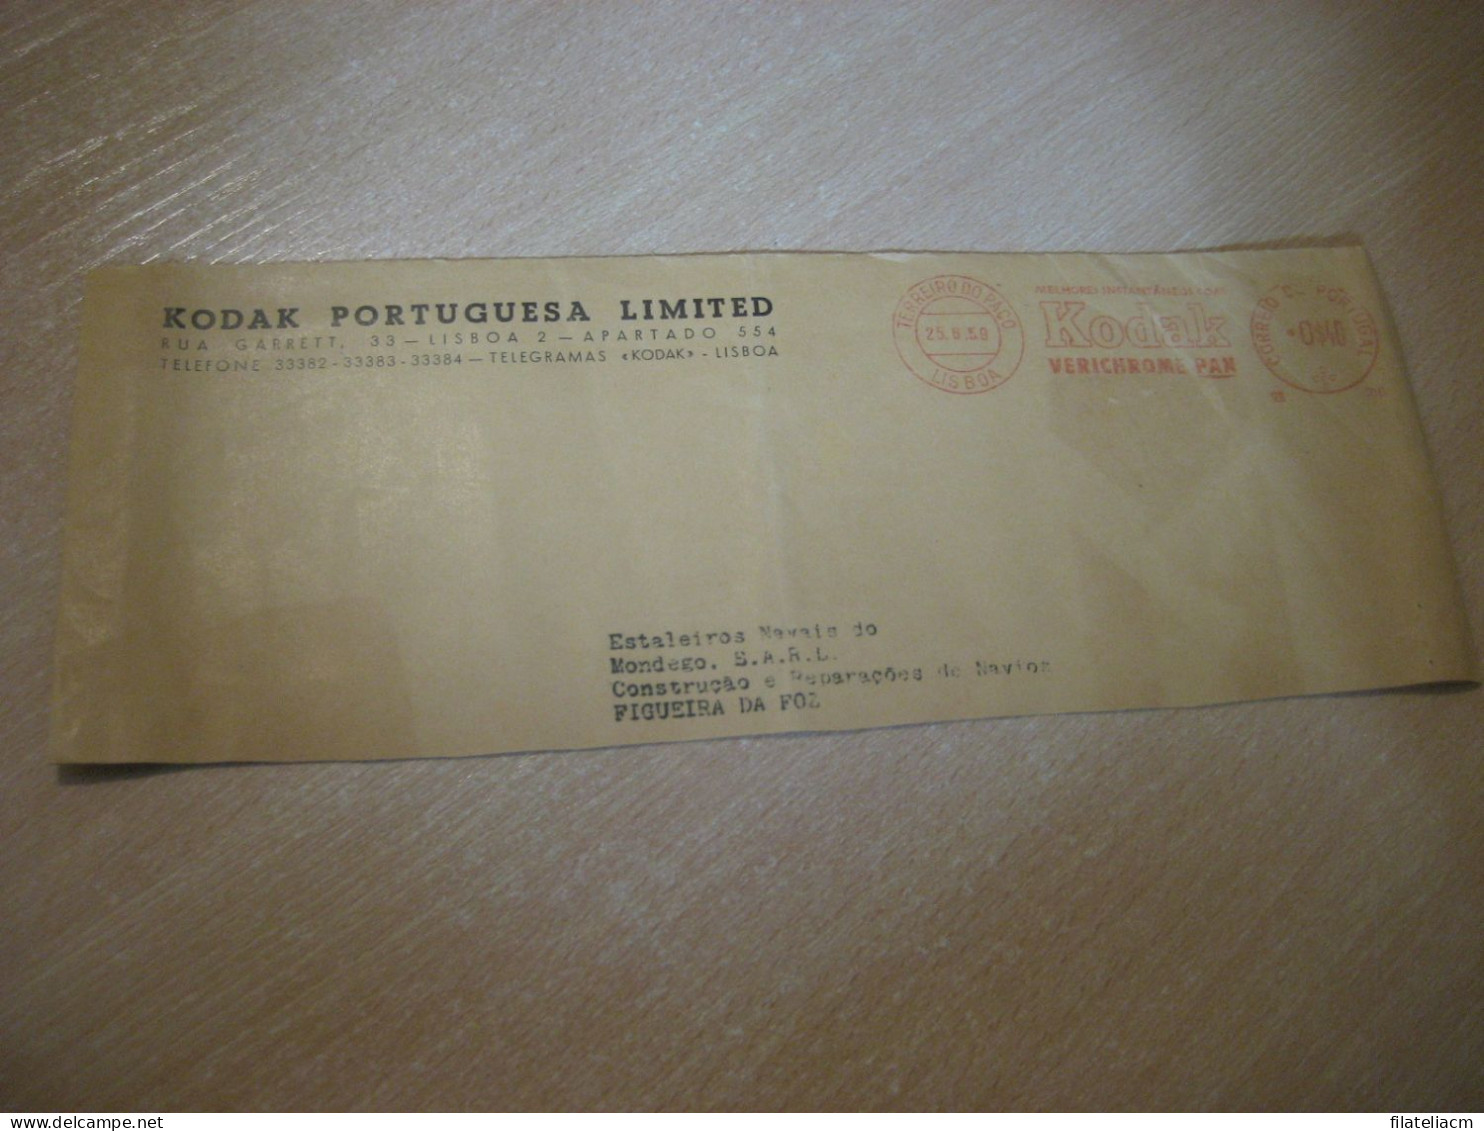 LISBOA 1959 To Figueira Da Foz KODAK Photo Photography Meter Mail Cancel Cut Cuted Cover PORTUGAL - Briefe U. Dokumente